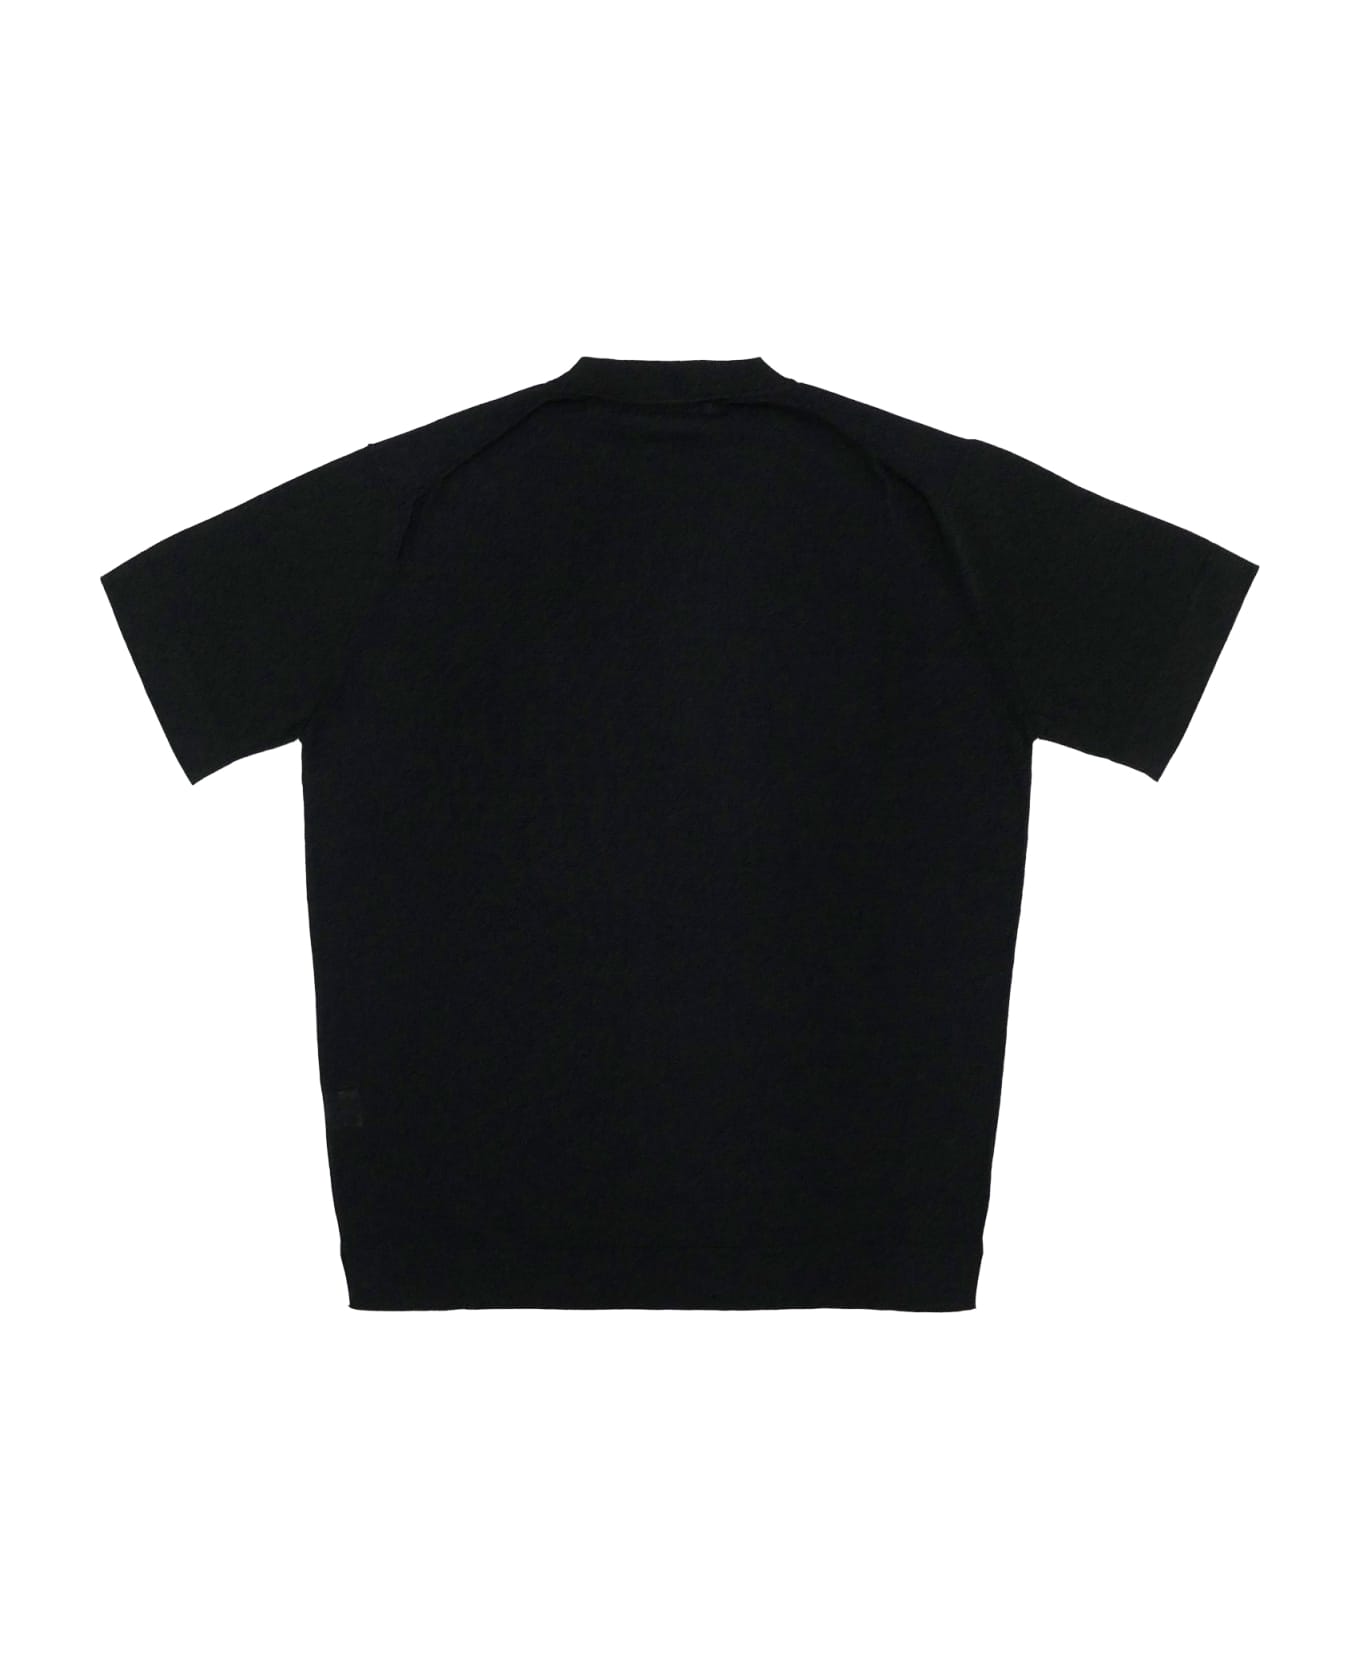 Filippo De Laurentiis T-shirt - Black シャツ